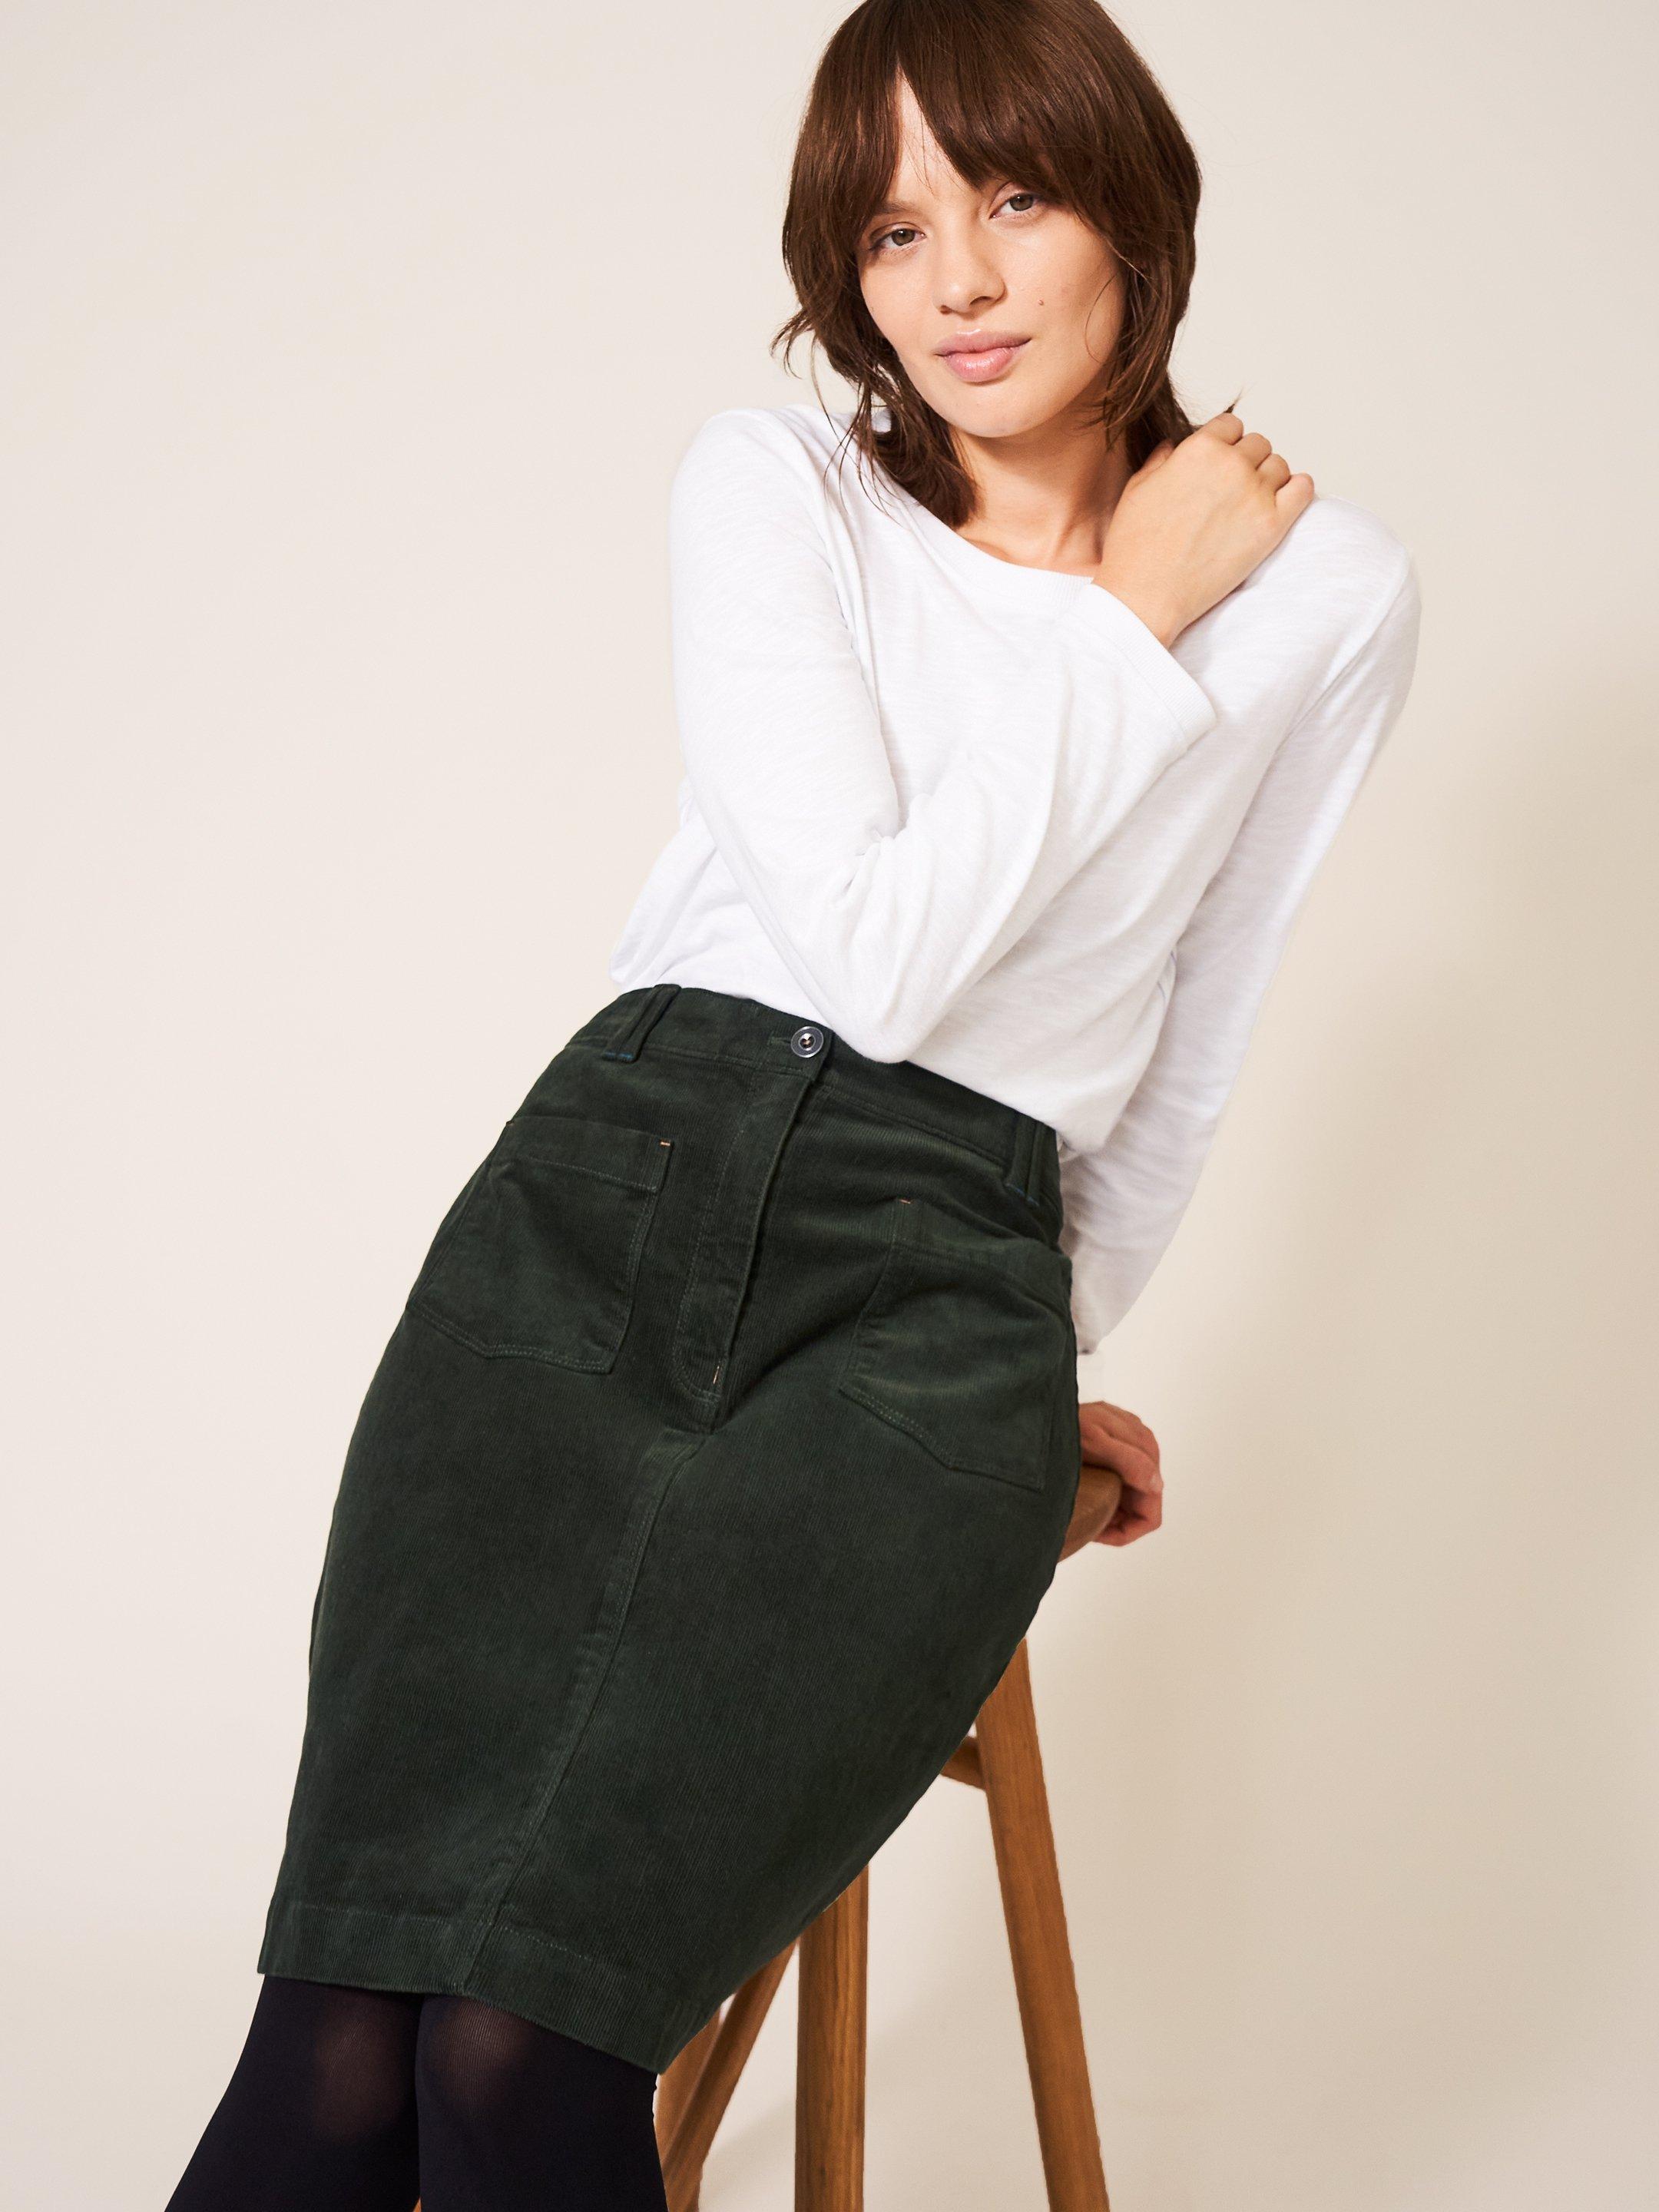 Melody Organic Cord Skirt in KHAKI GRN - LIFESTYLE